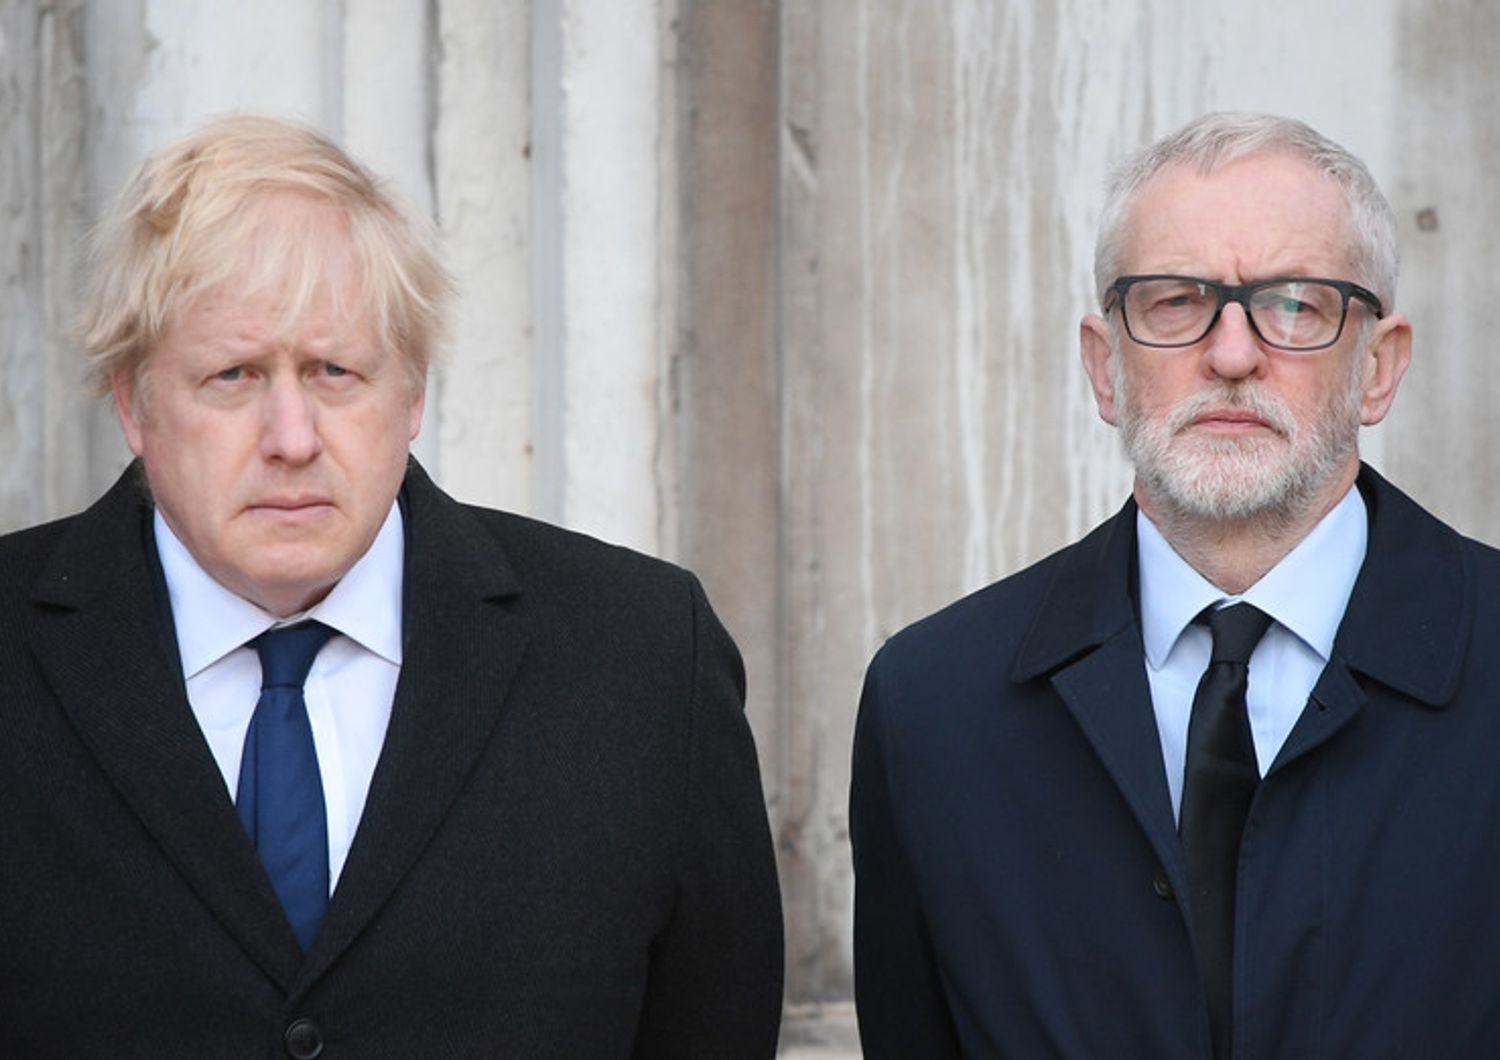 Boris Johnson e Jeremy Corbyn